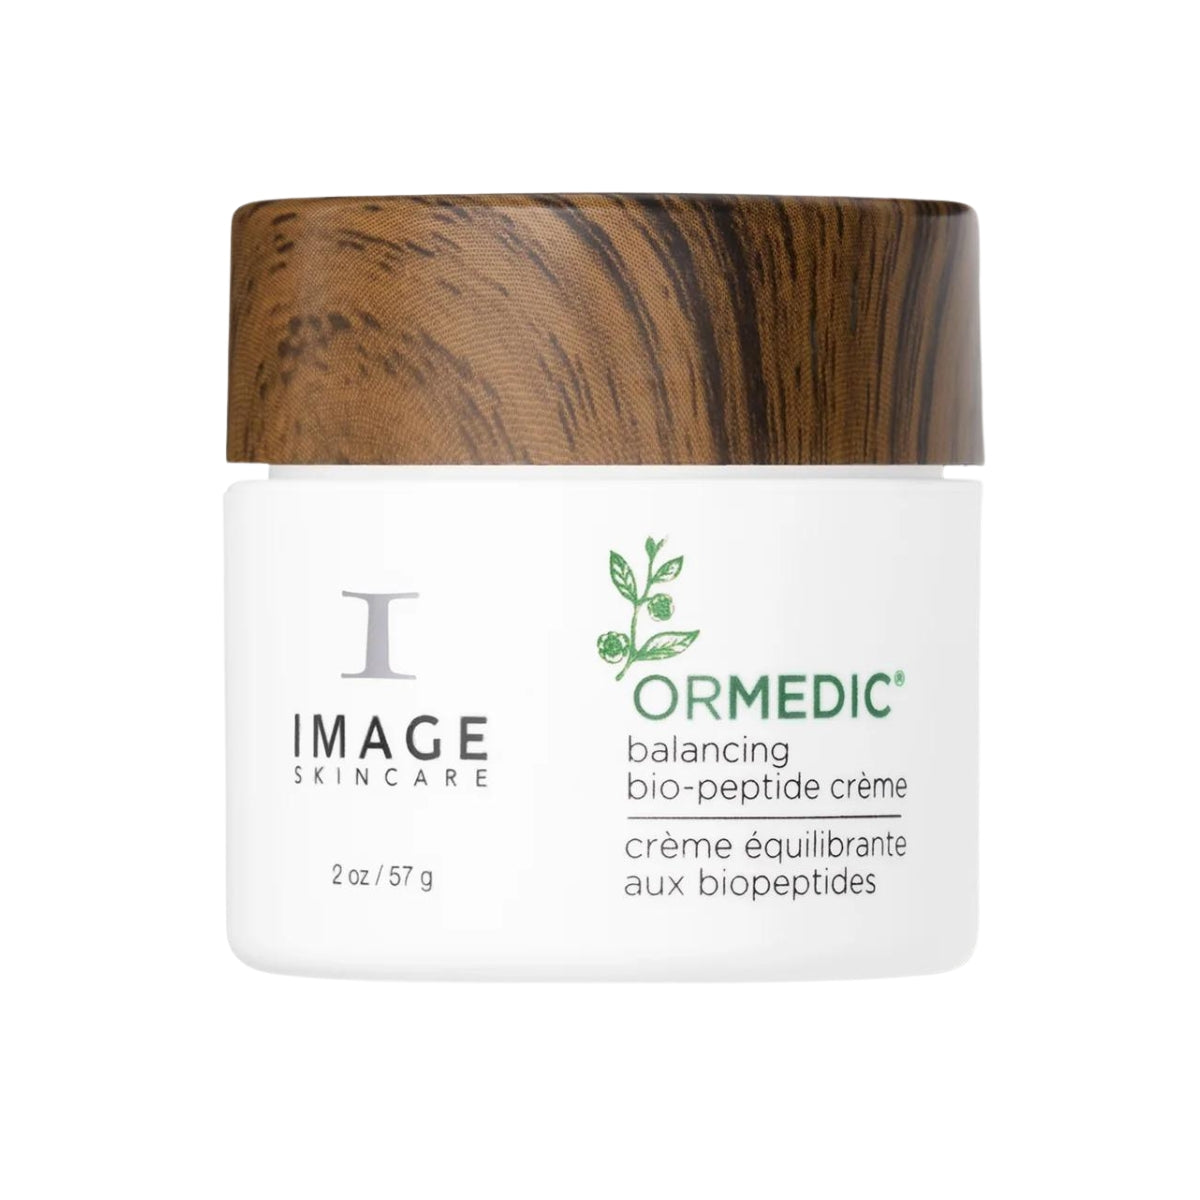 IMAGE Skincare Ormedic Balancing Bio Peptide Creme